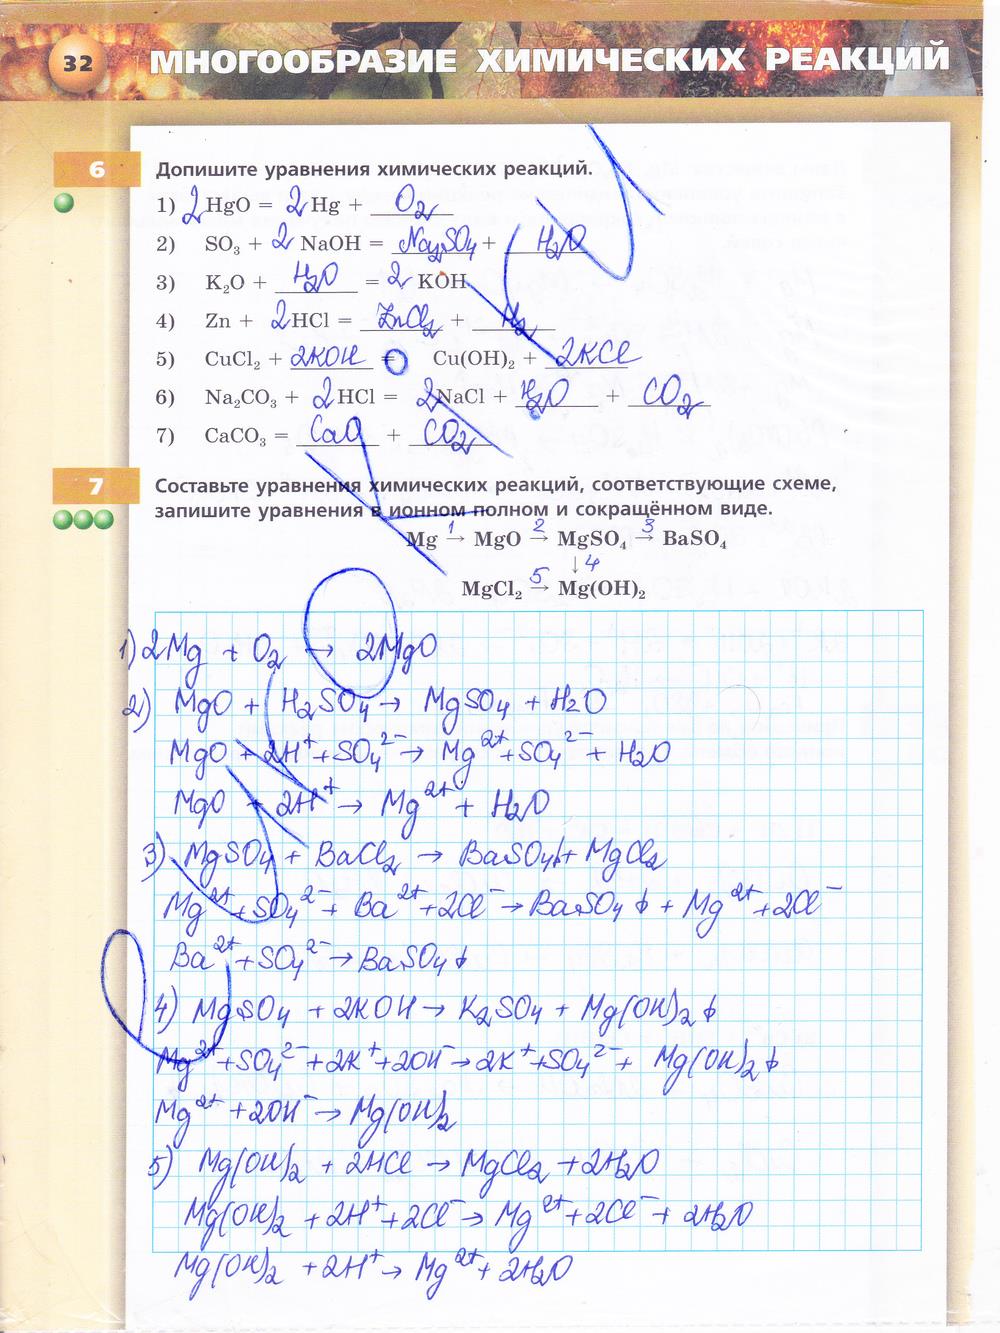 гдз 9 класс тетрадь-тренажёр страница 32 химия Гара